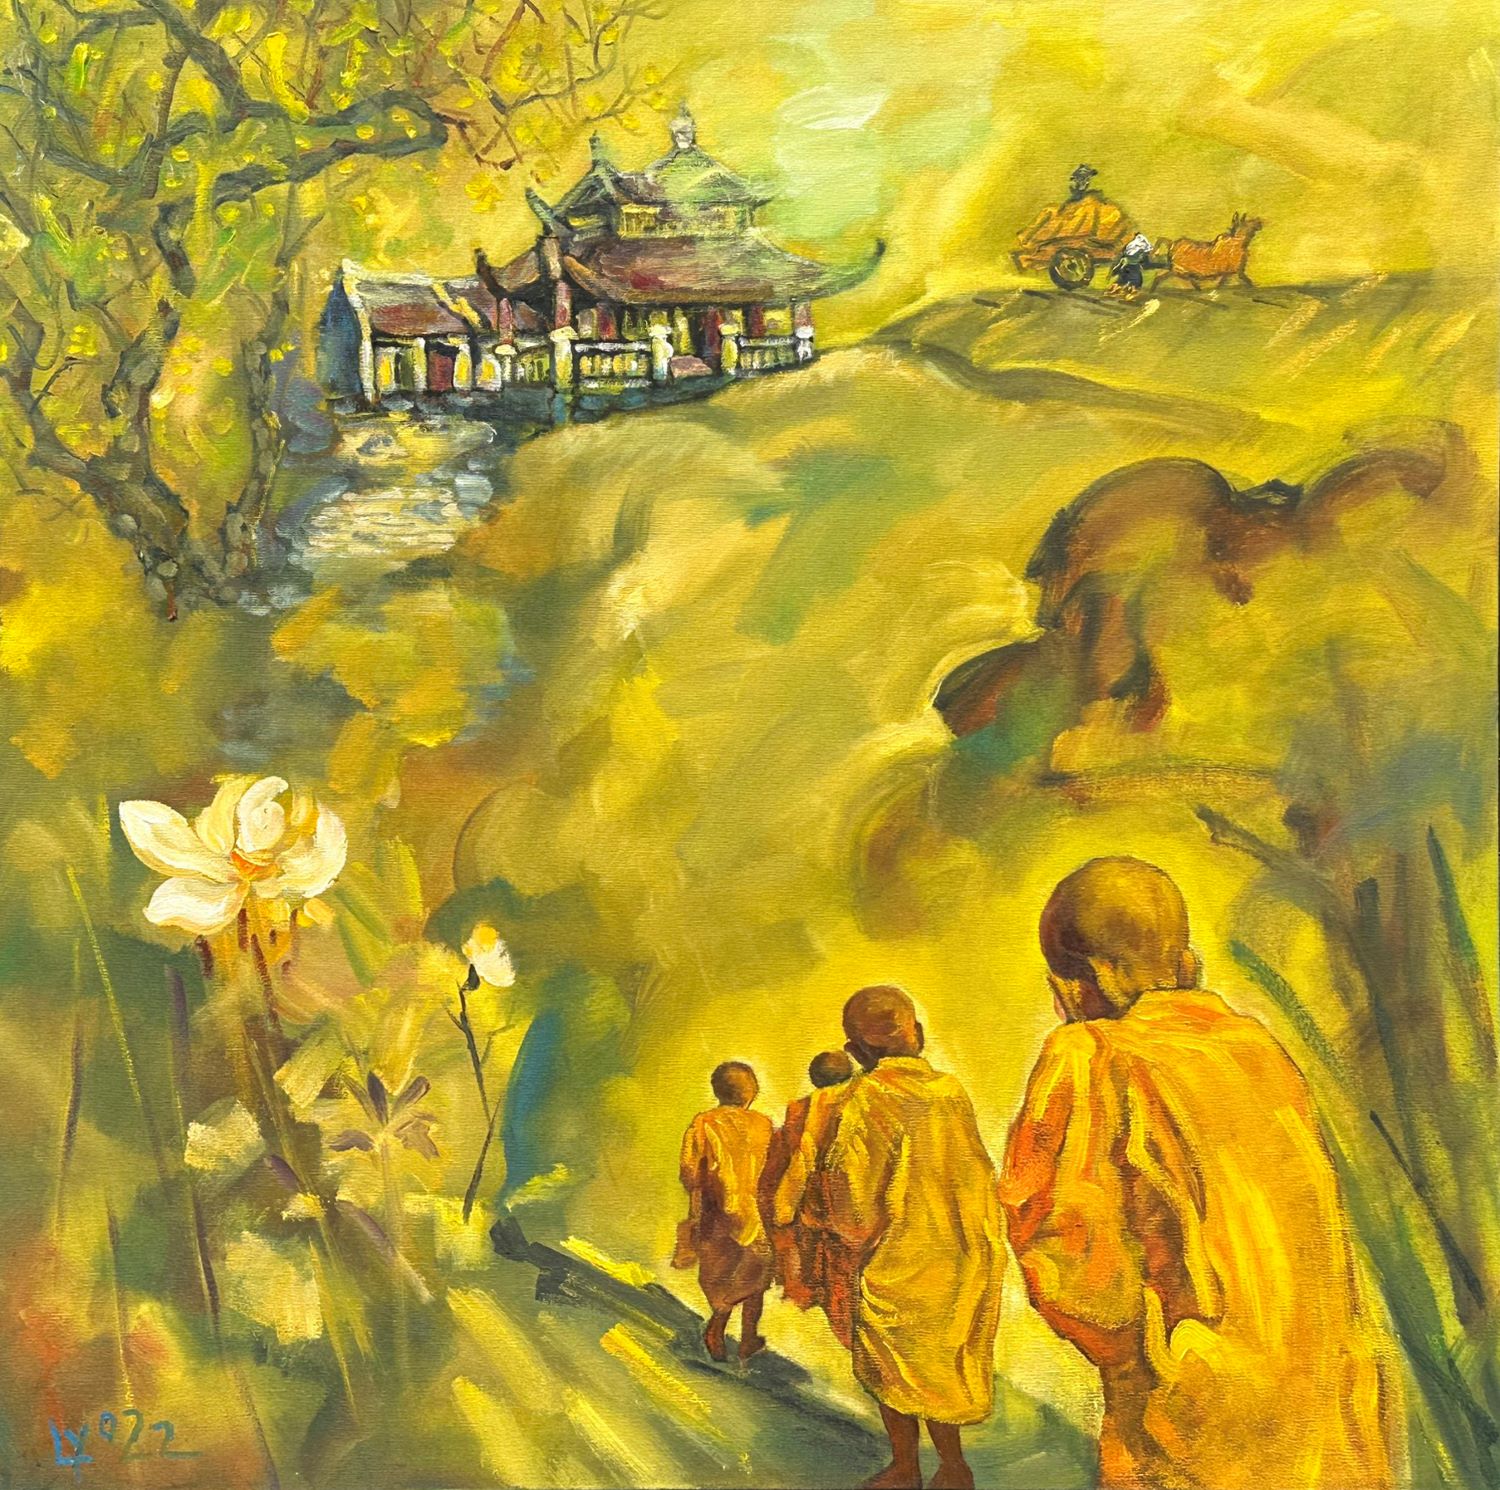 Pilgrimage - Vietnamese Oil Painting by Artist Le Ngoc Ly